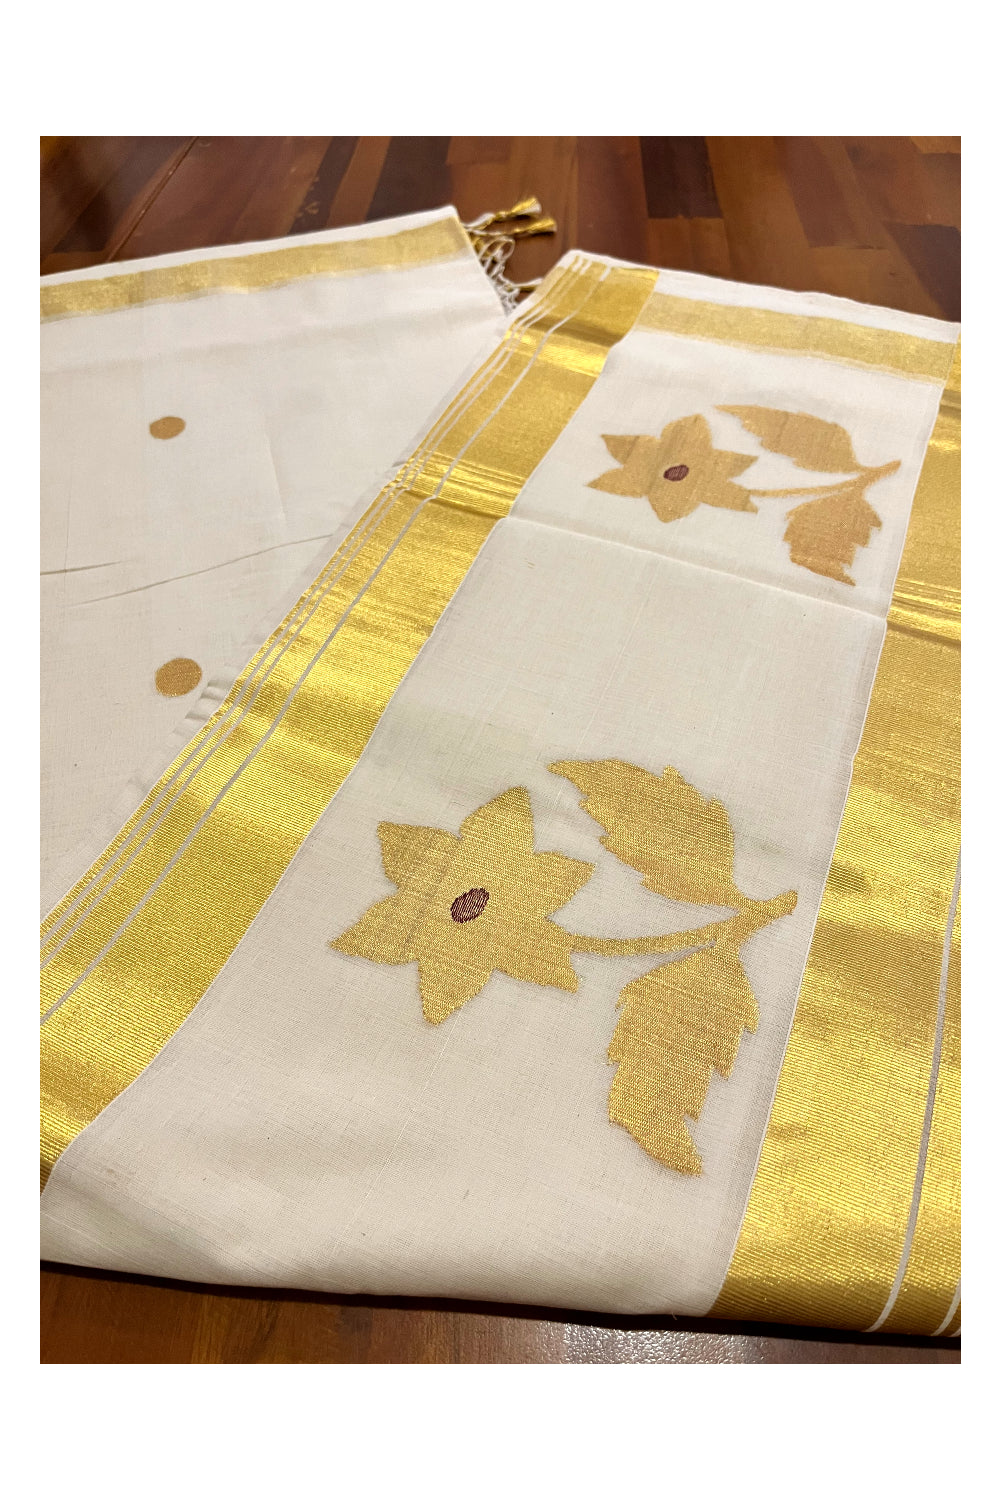 Southloom™ Super Premium Balaramapuram Unakkupaavu Handloom Cotton Saree with Floral Designs on Munthani